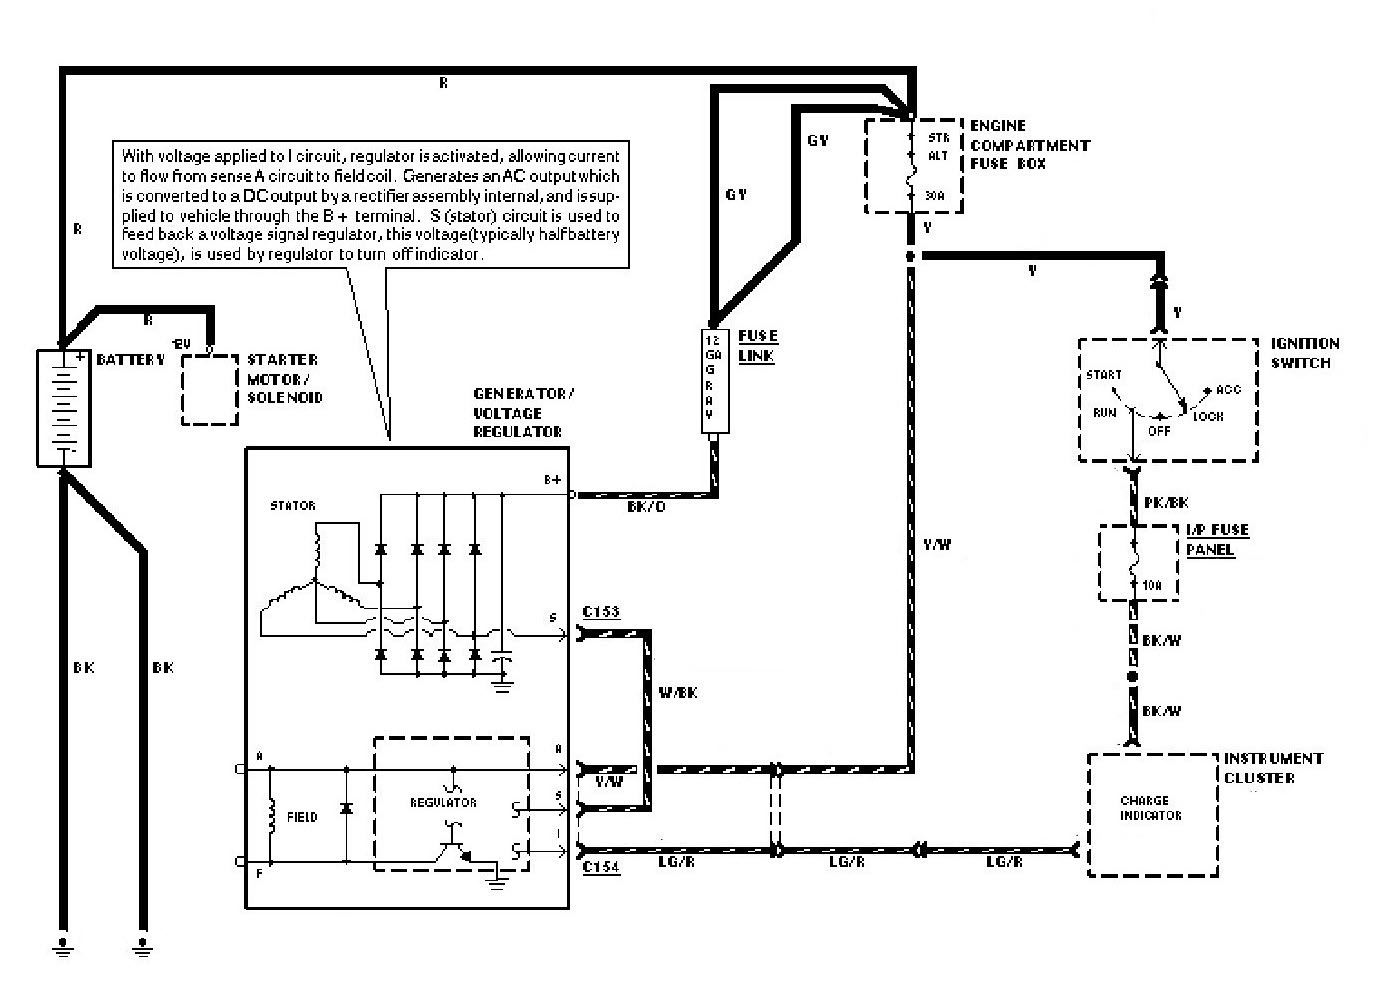 ford 2g alternator wiring diagram